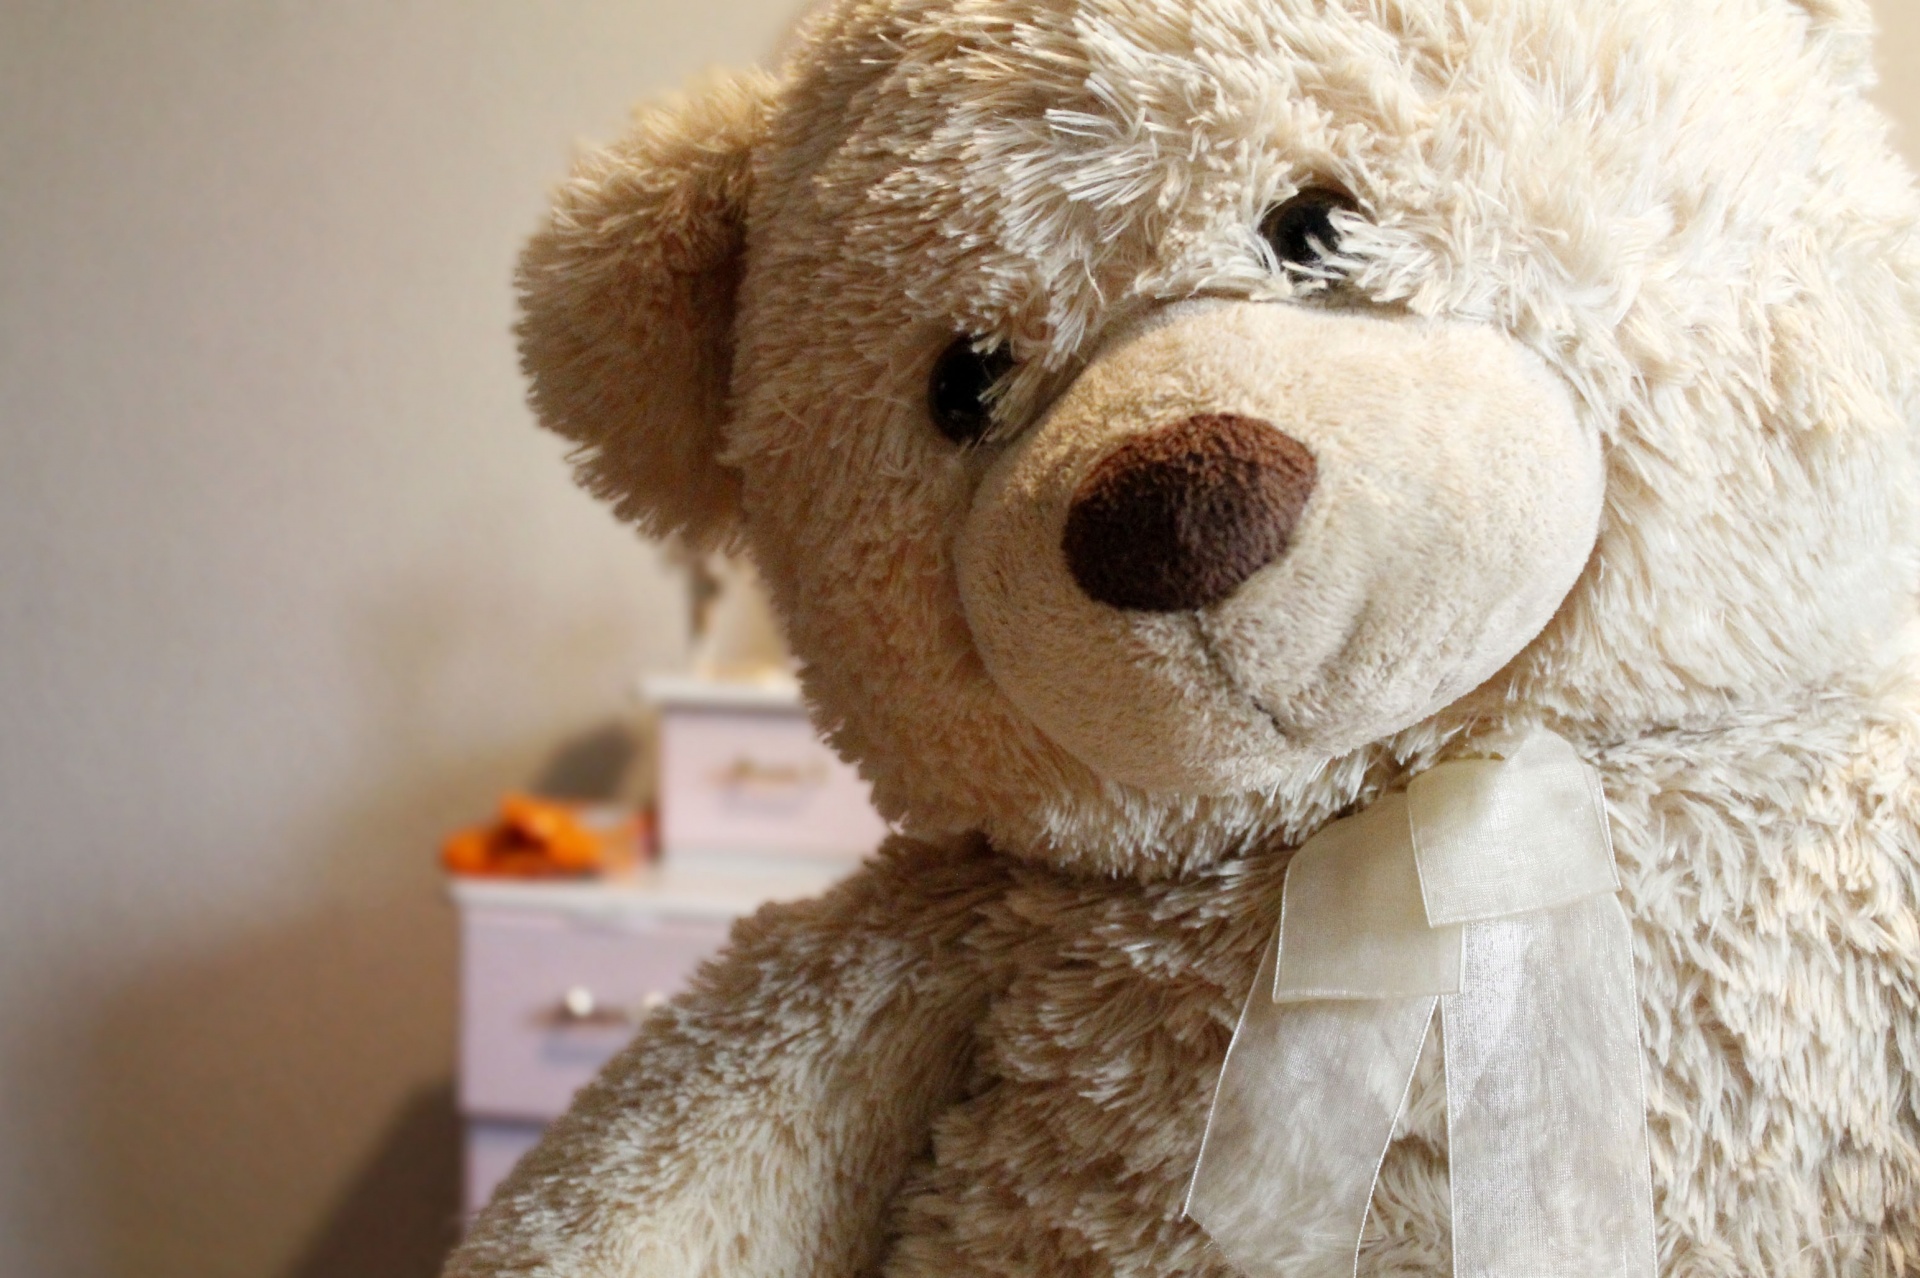 Cute Teddy Bear